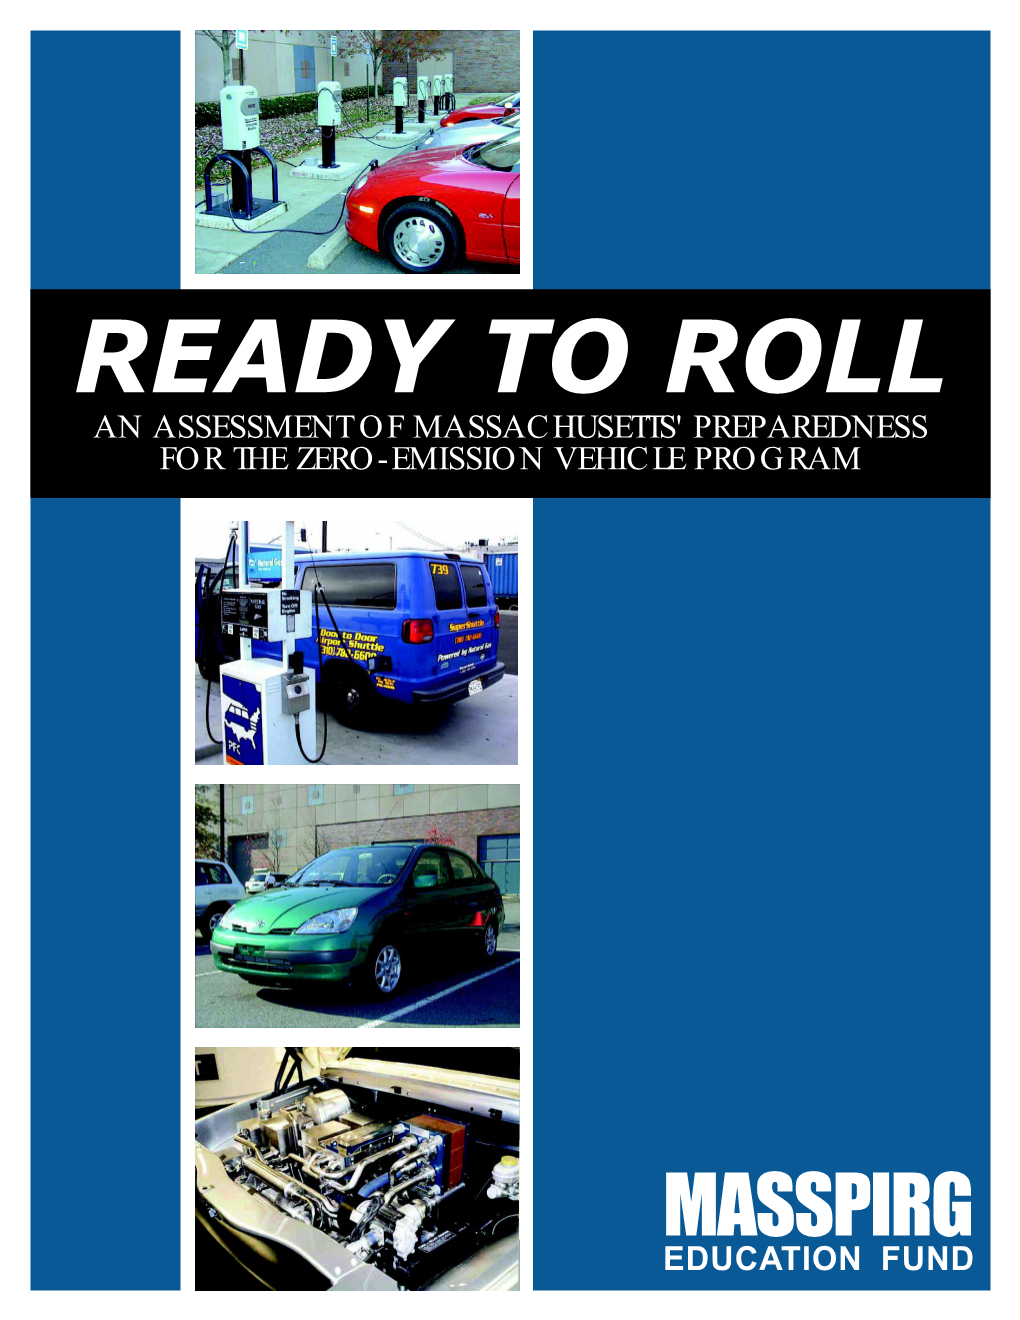 Ready to Roll an Assessment of Massachusetts' Preparedness for the Zero-Emission Vehicle Program